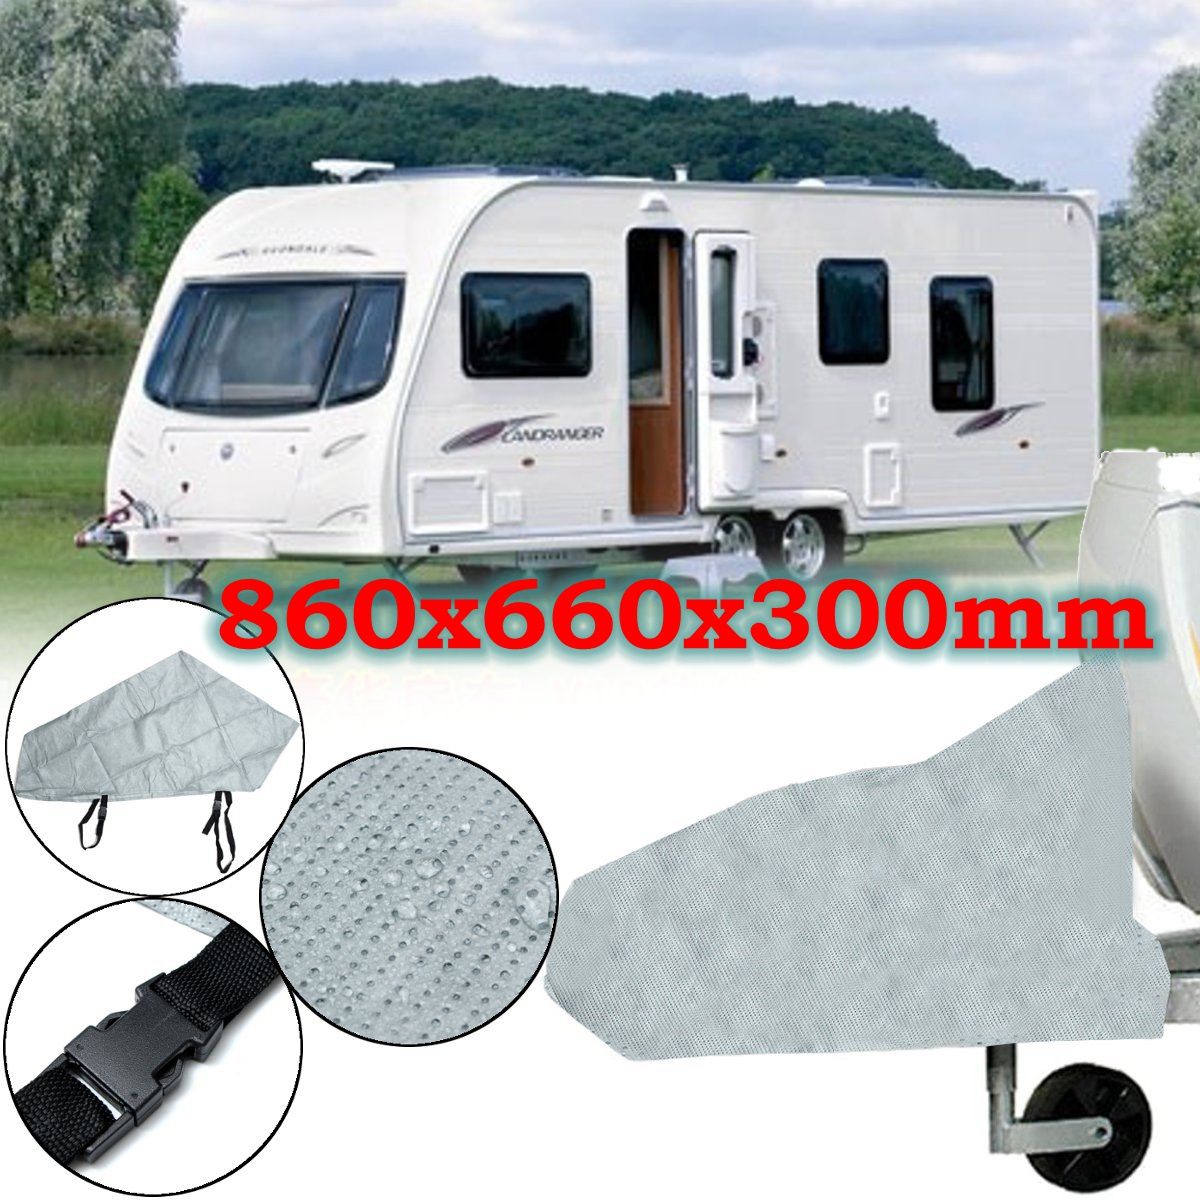 Waterproof-Caravan-Trailer-Towing-Hitch-Coupling-Lock-Cover-Rain-Dust-Protector-1300800